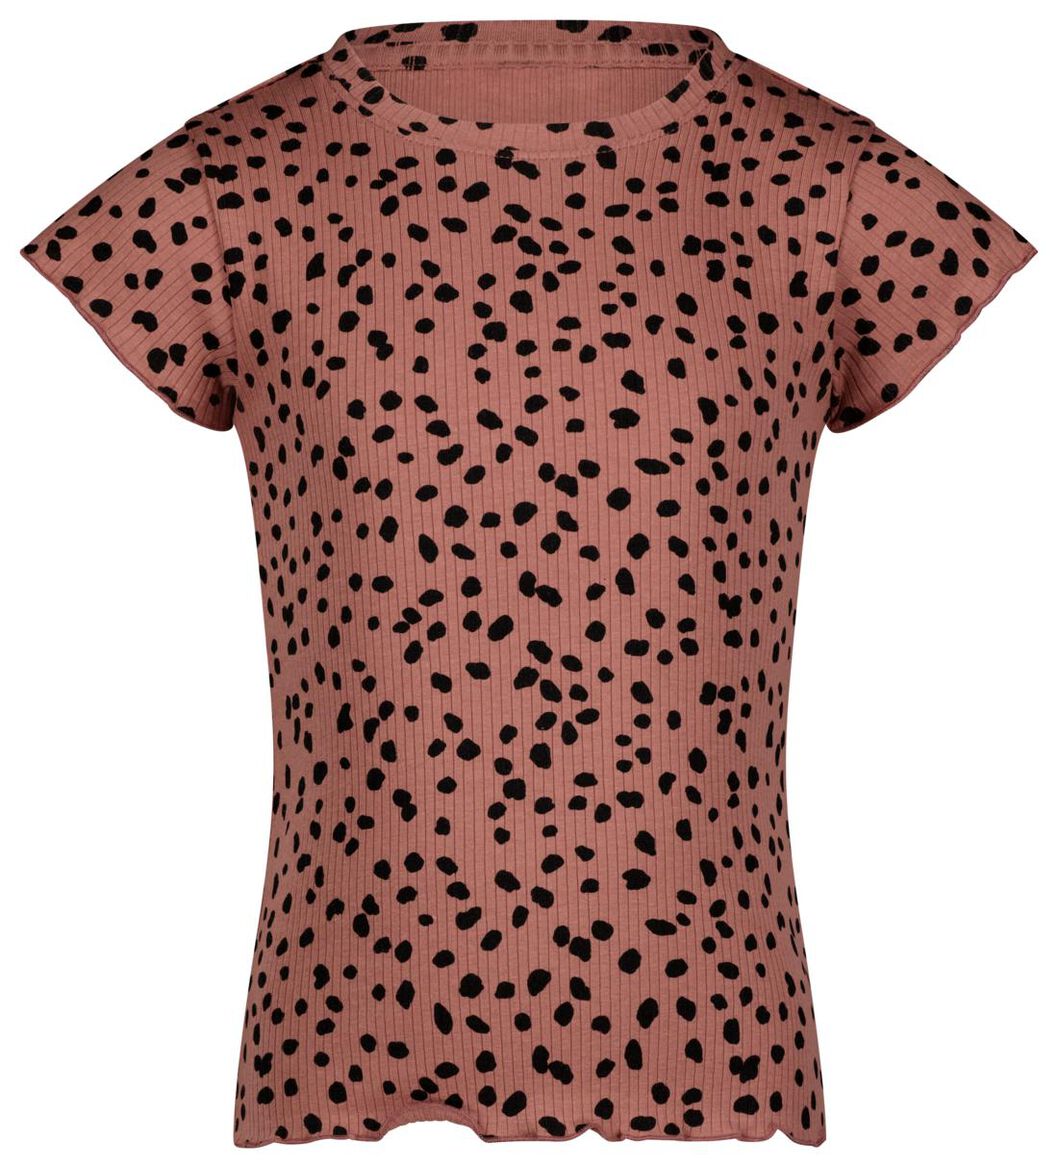 kinder t-shirt rib roze - 1000027651 - HEMA